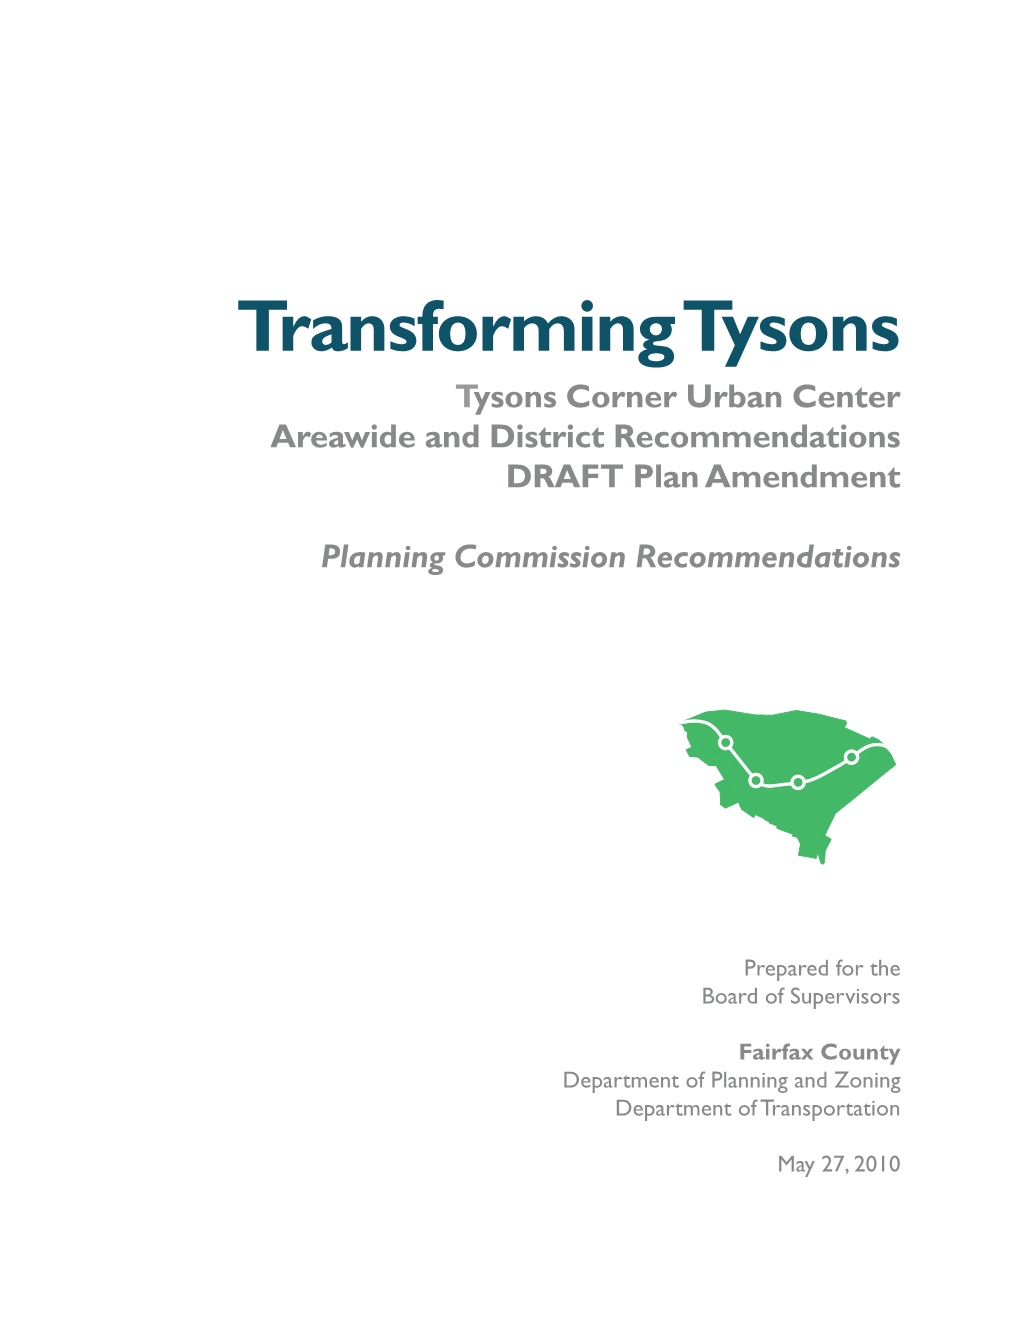 DRAFT Tysons Plan Amendment, PC Recommendations, May 27, 2010